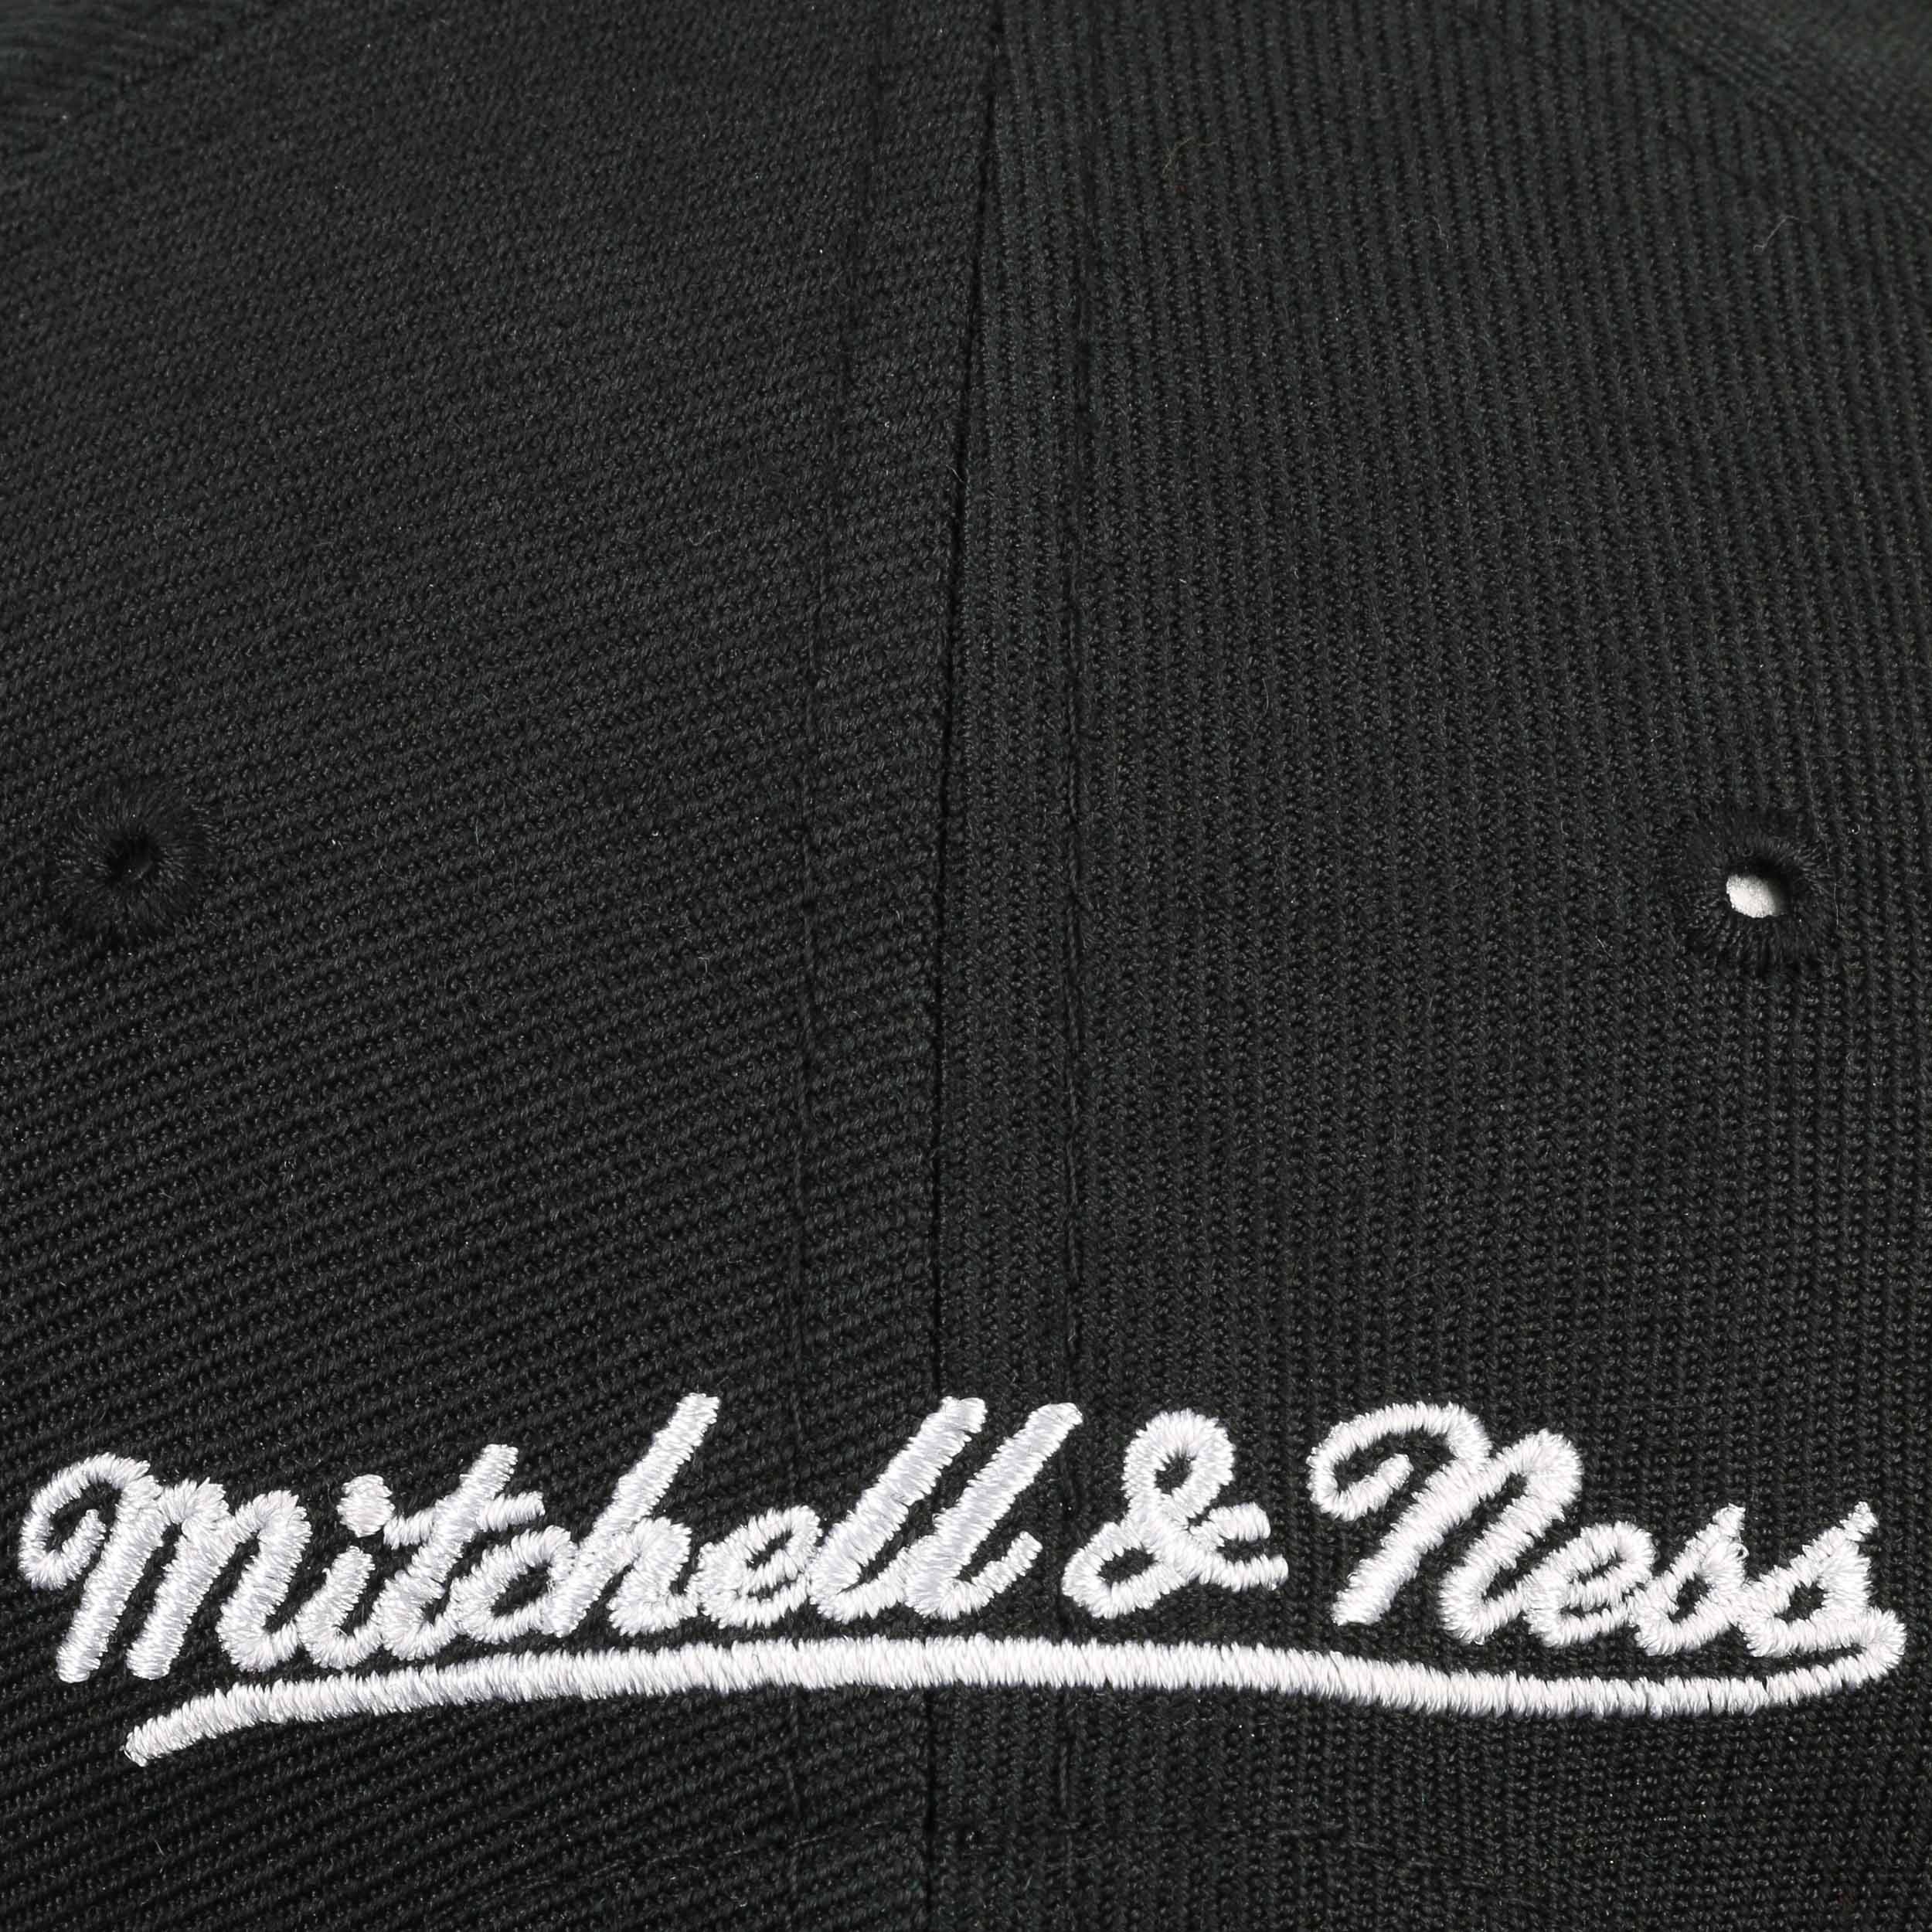 Caps Mitchell & Ness Nba Diamond Cut Boston Celtics Snapback • shop